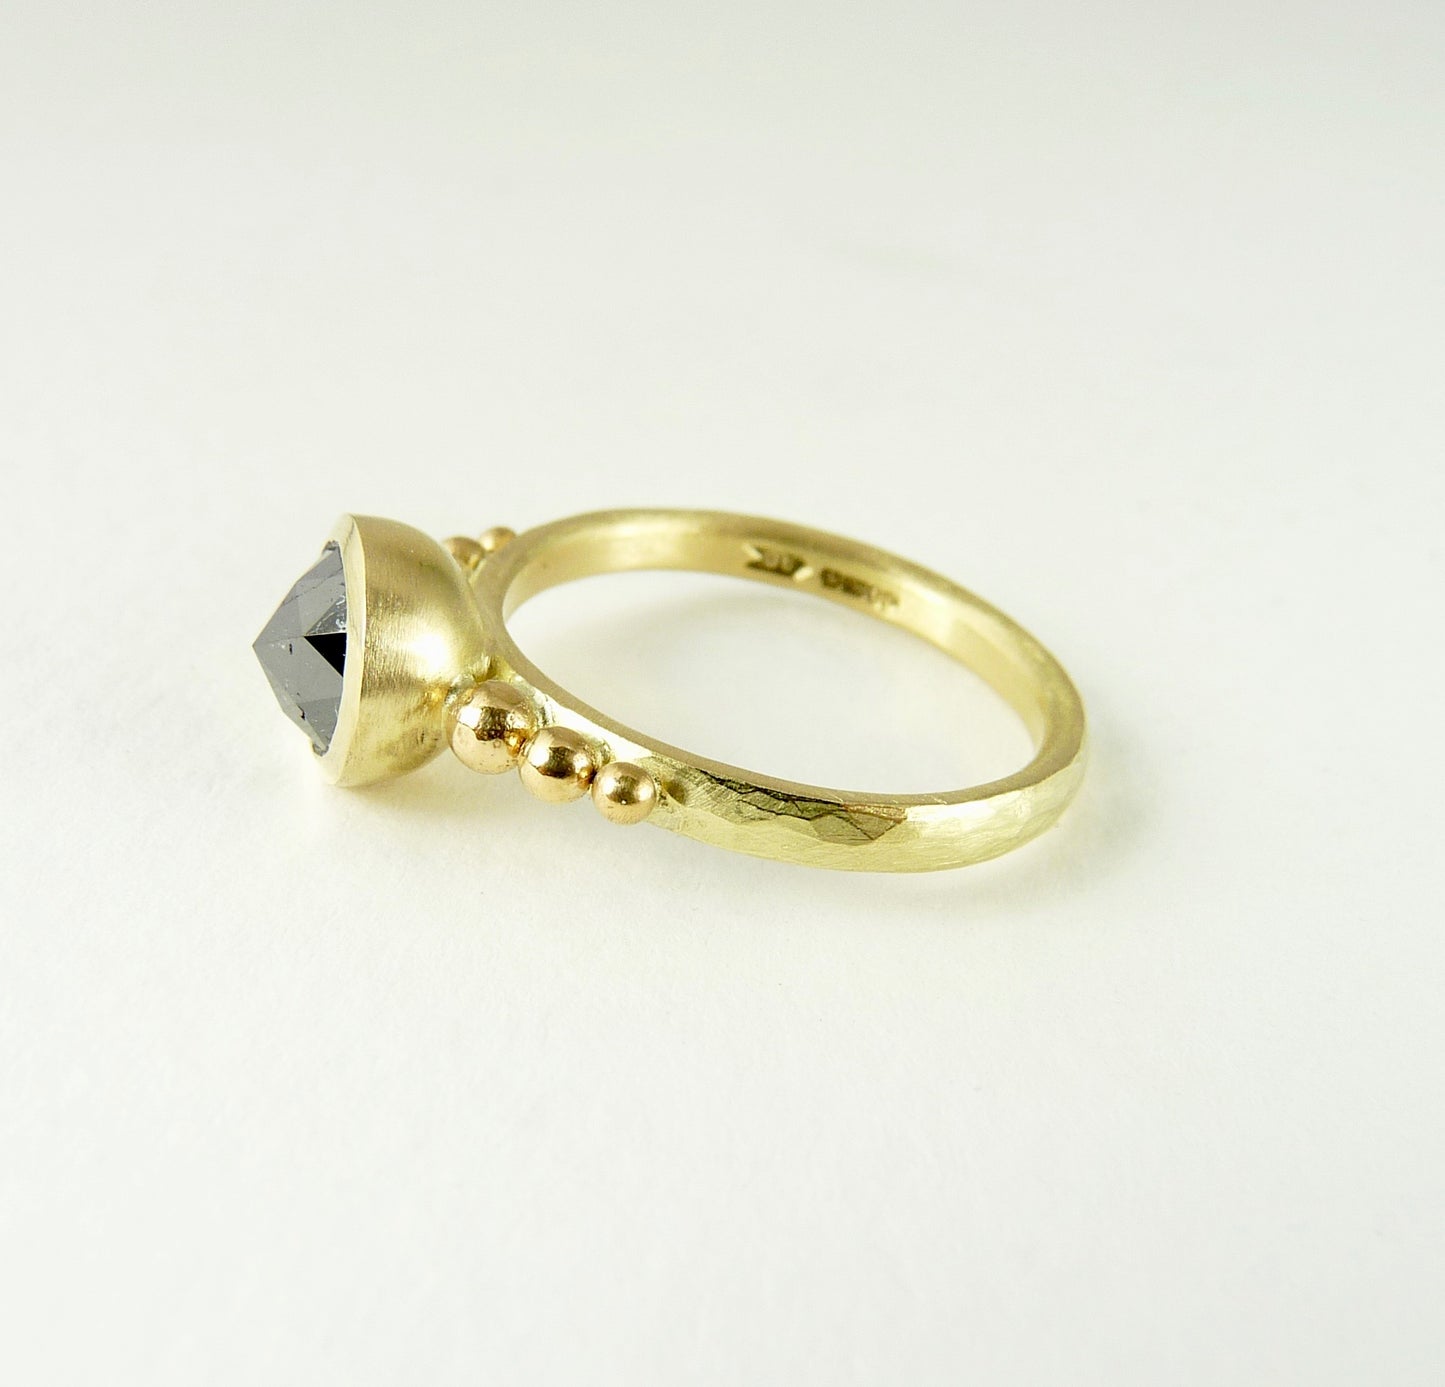 Rose Cut Black Diamond Granulation Ring